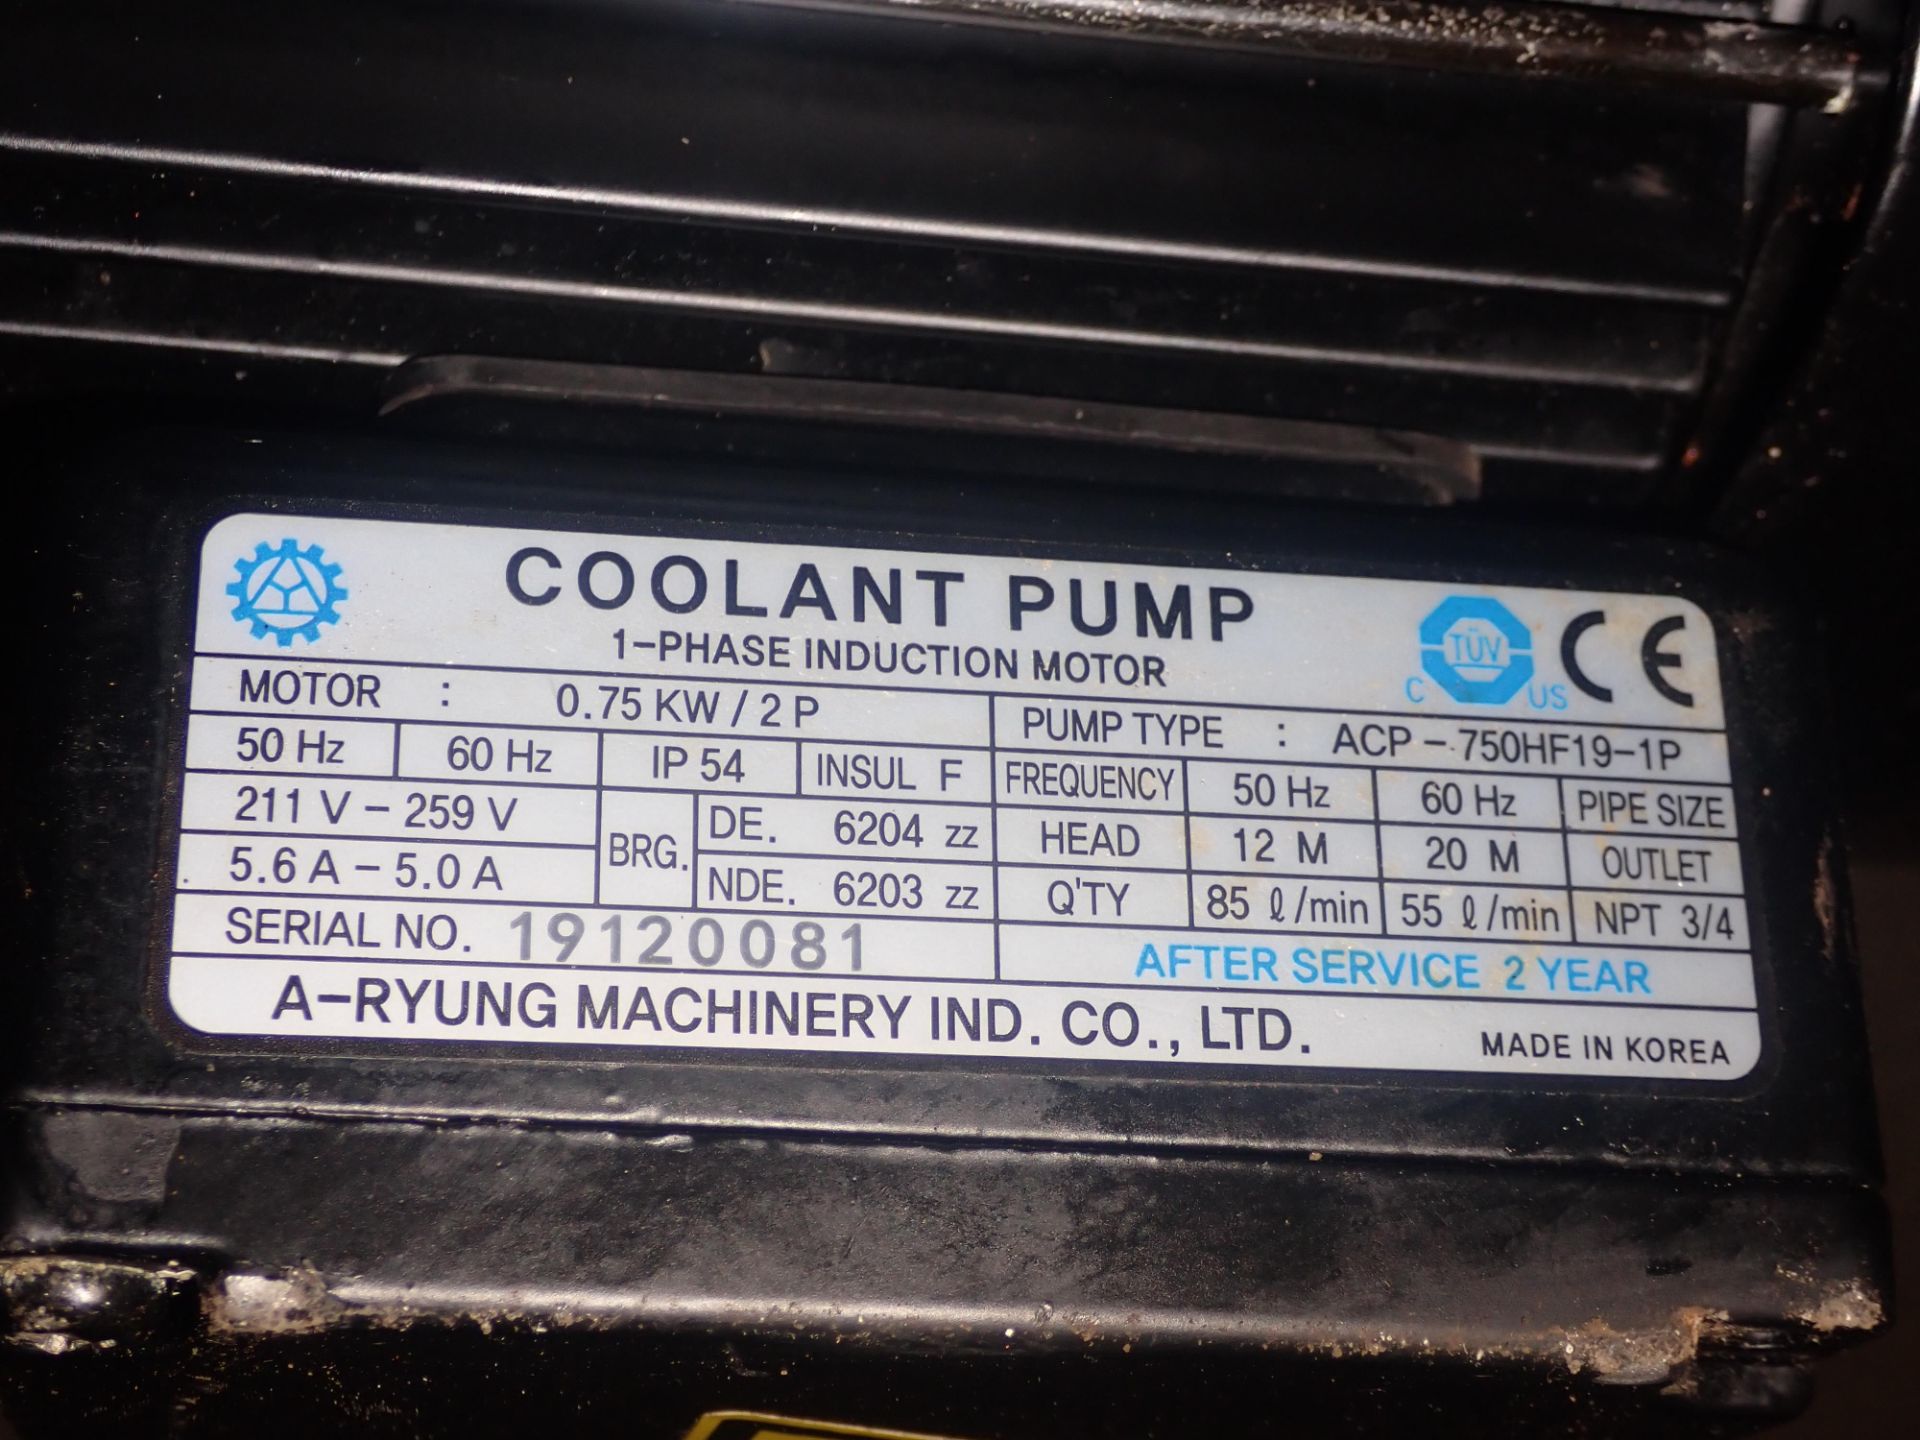 A-Ryung #ACP-750HF19-1P Coolant Pump - Image 3 of 3